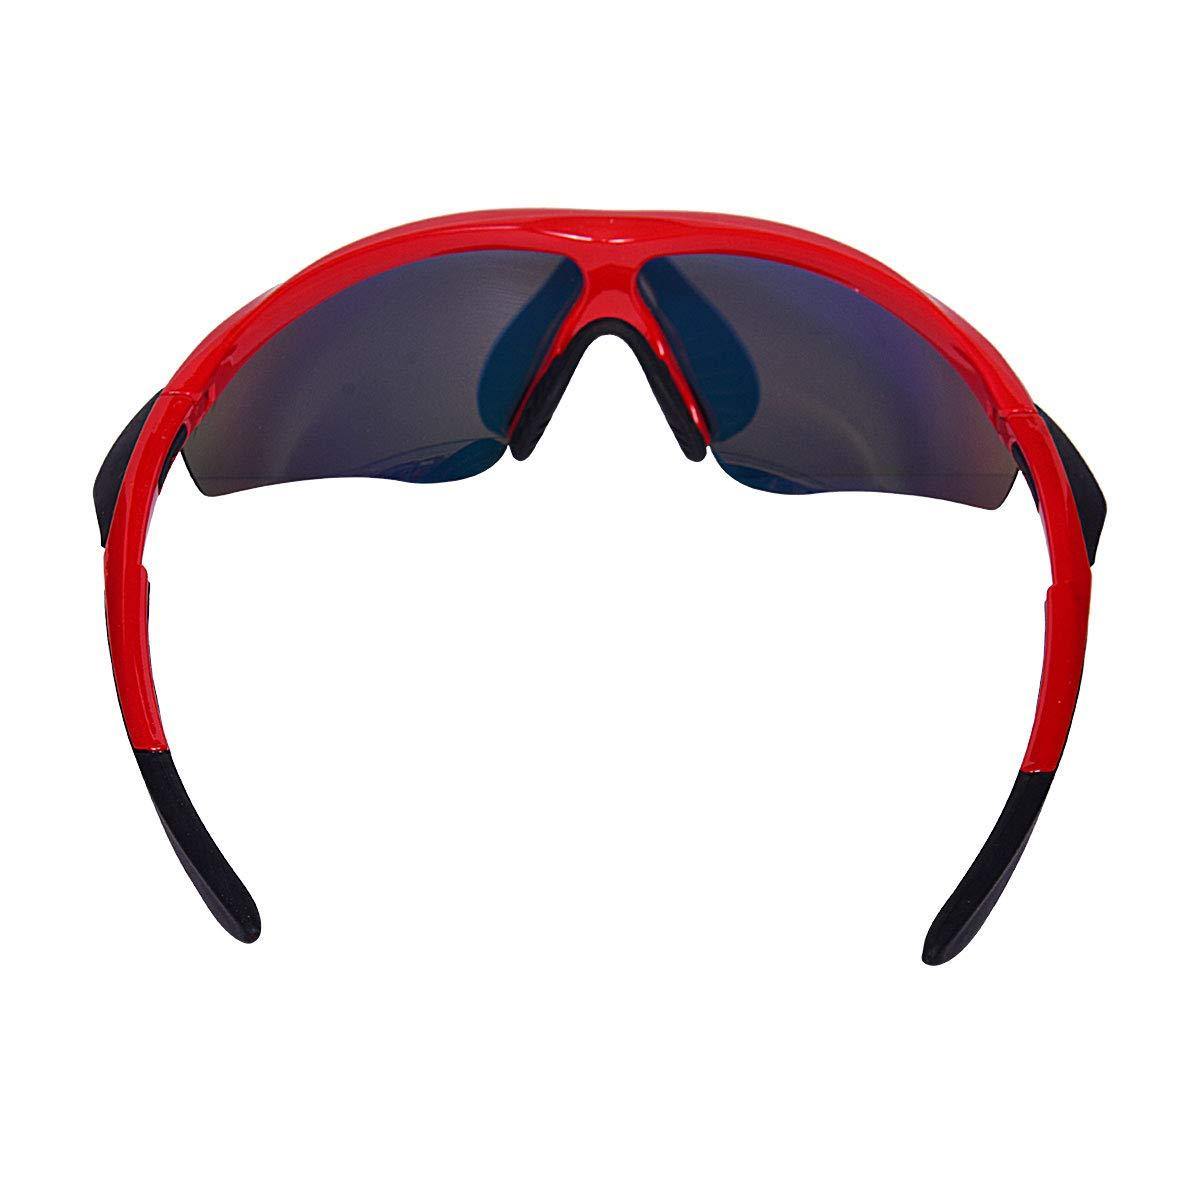 DSC Passion Polarized Cricket Sunglasses Red - Best Price online Prokicksports.com